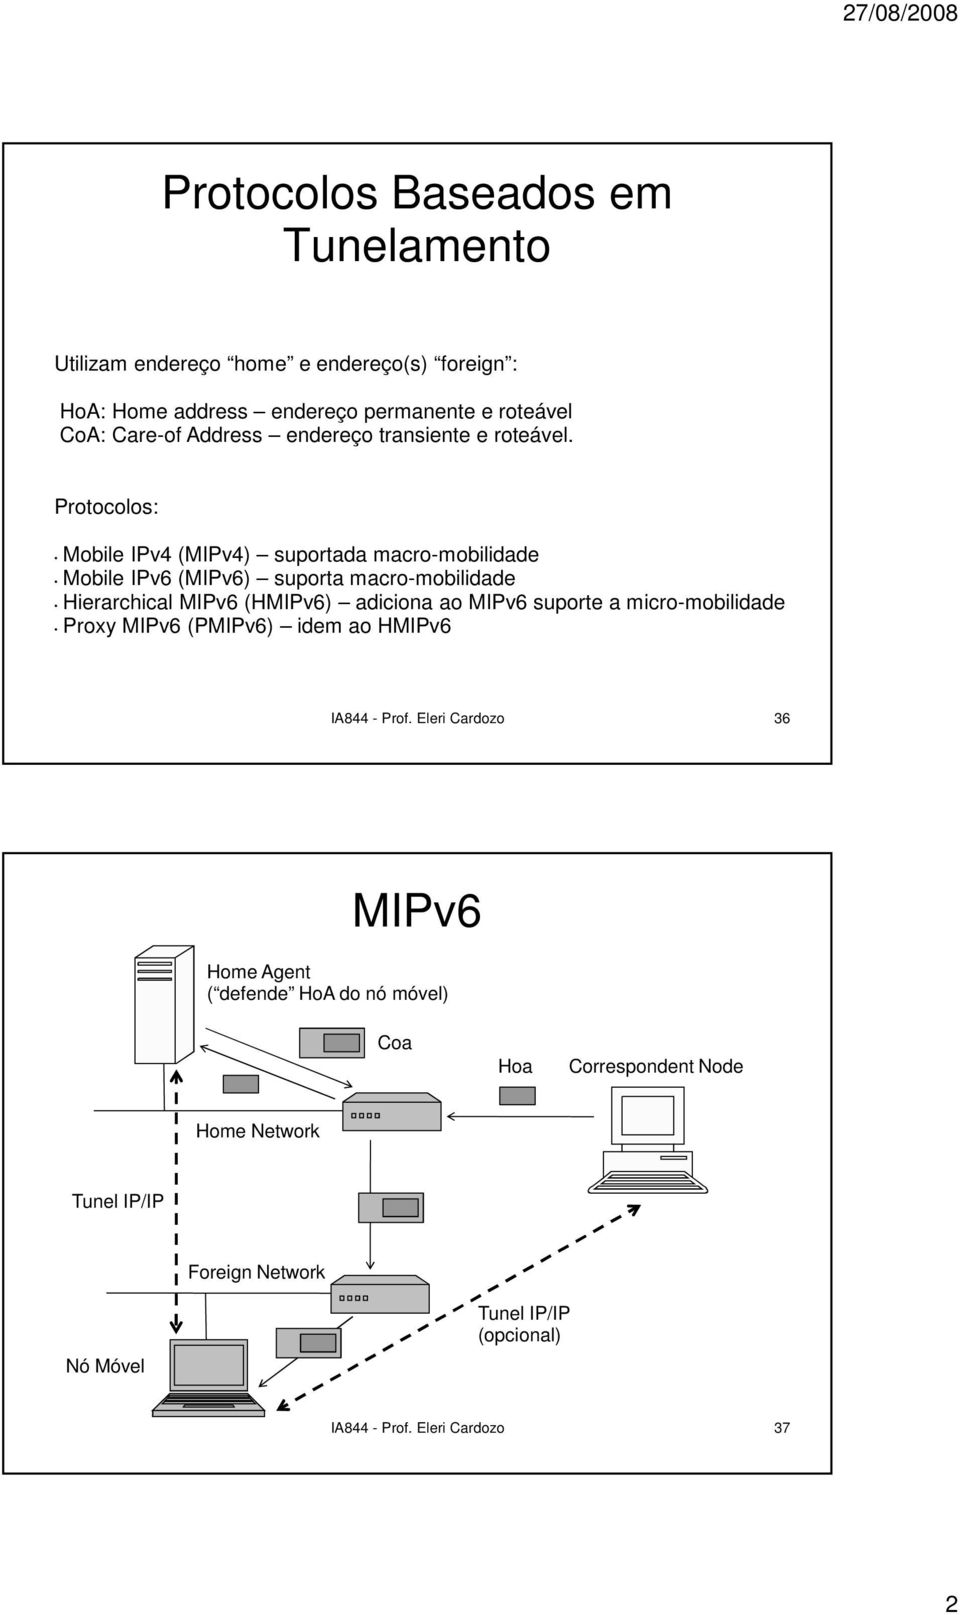 Protocolos: Mobile IPv4 (MIPv4) suportada macro-mobilidade Mobile IPv6 (MIPv6) suporta macro-mobilidade Hierarchical MIPv6 (HMIPv6) adiciona